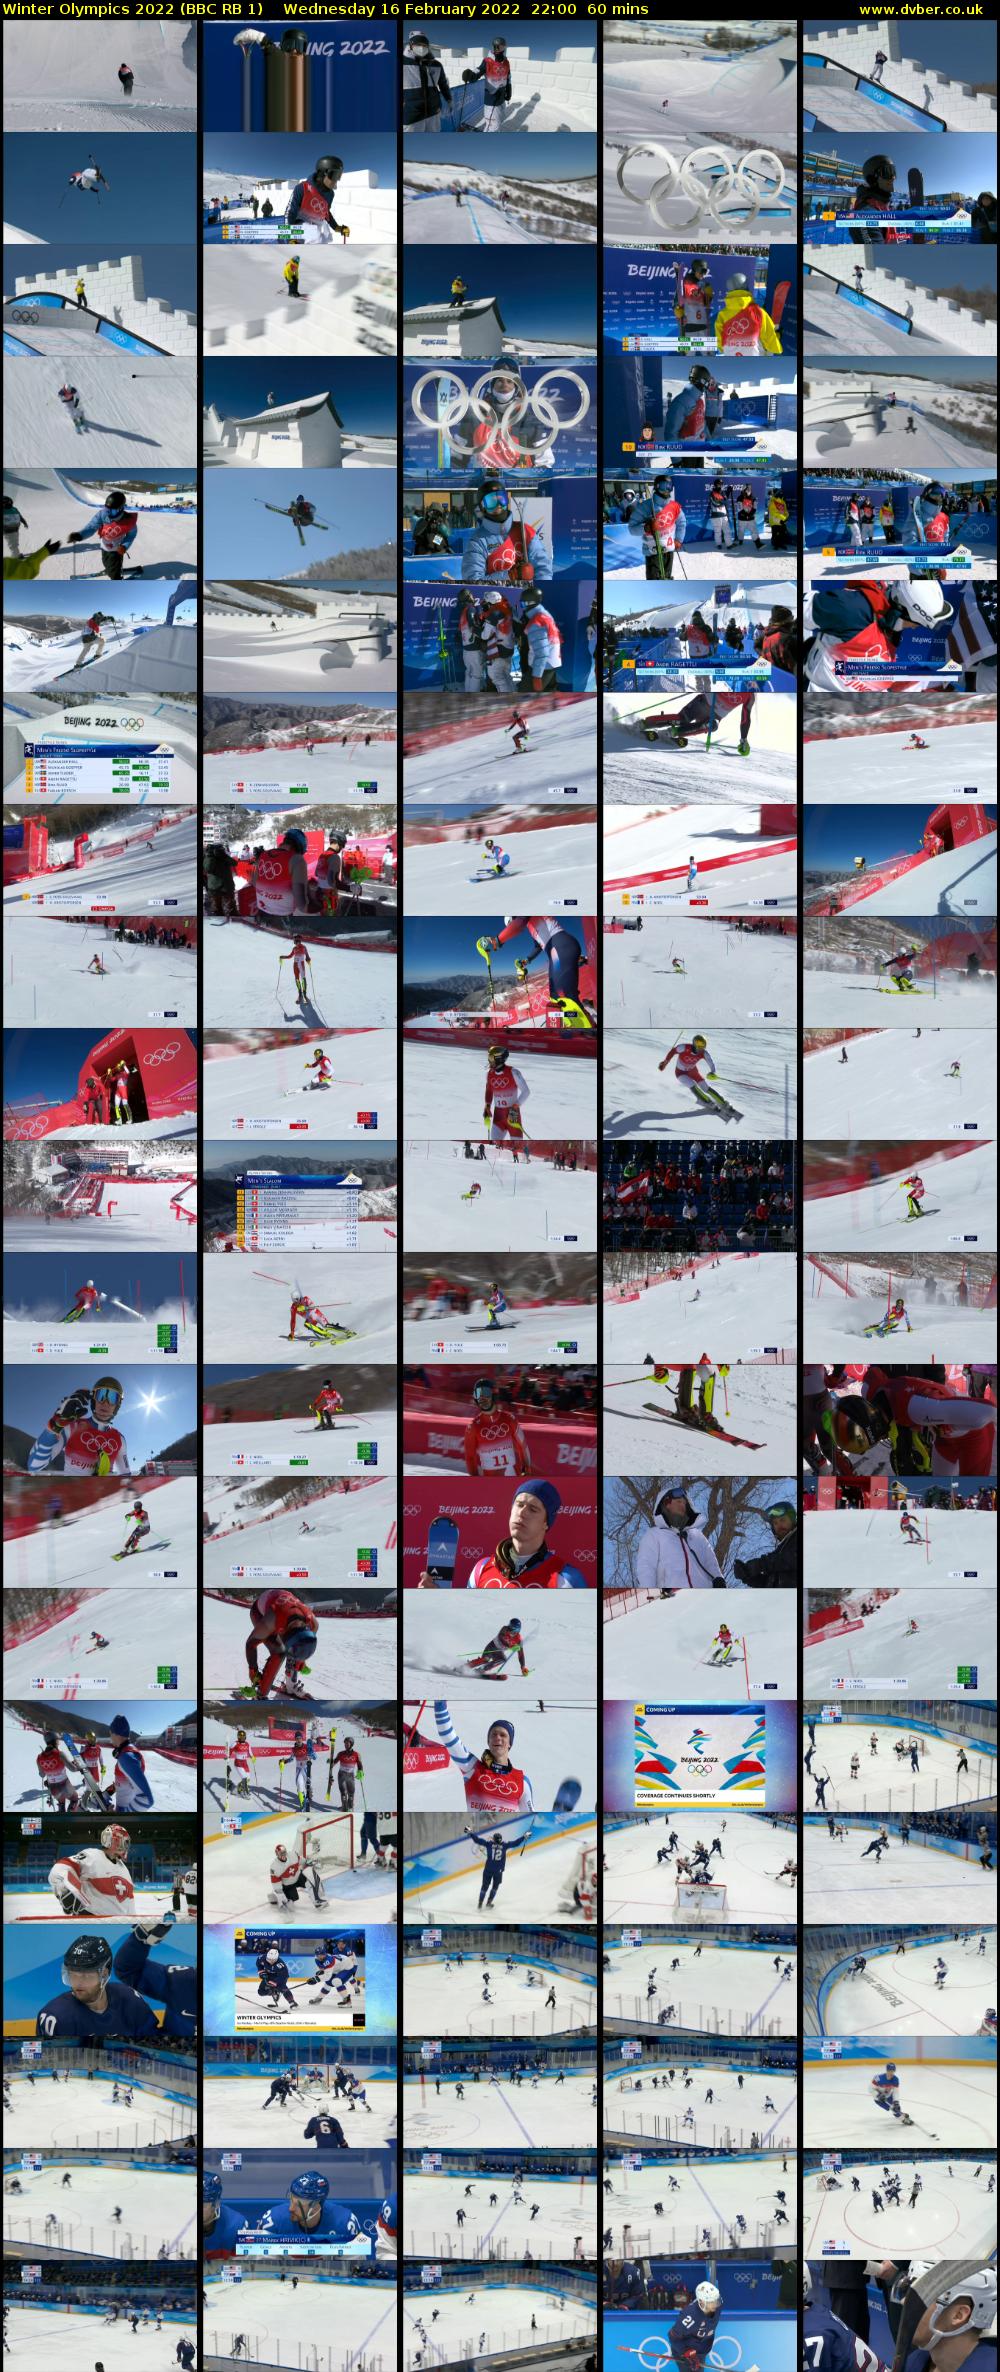 Winter Olympics 2022 (BBC RB 1) Wednesday 16 February 2022 22:00 - 23:00